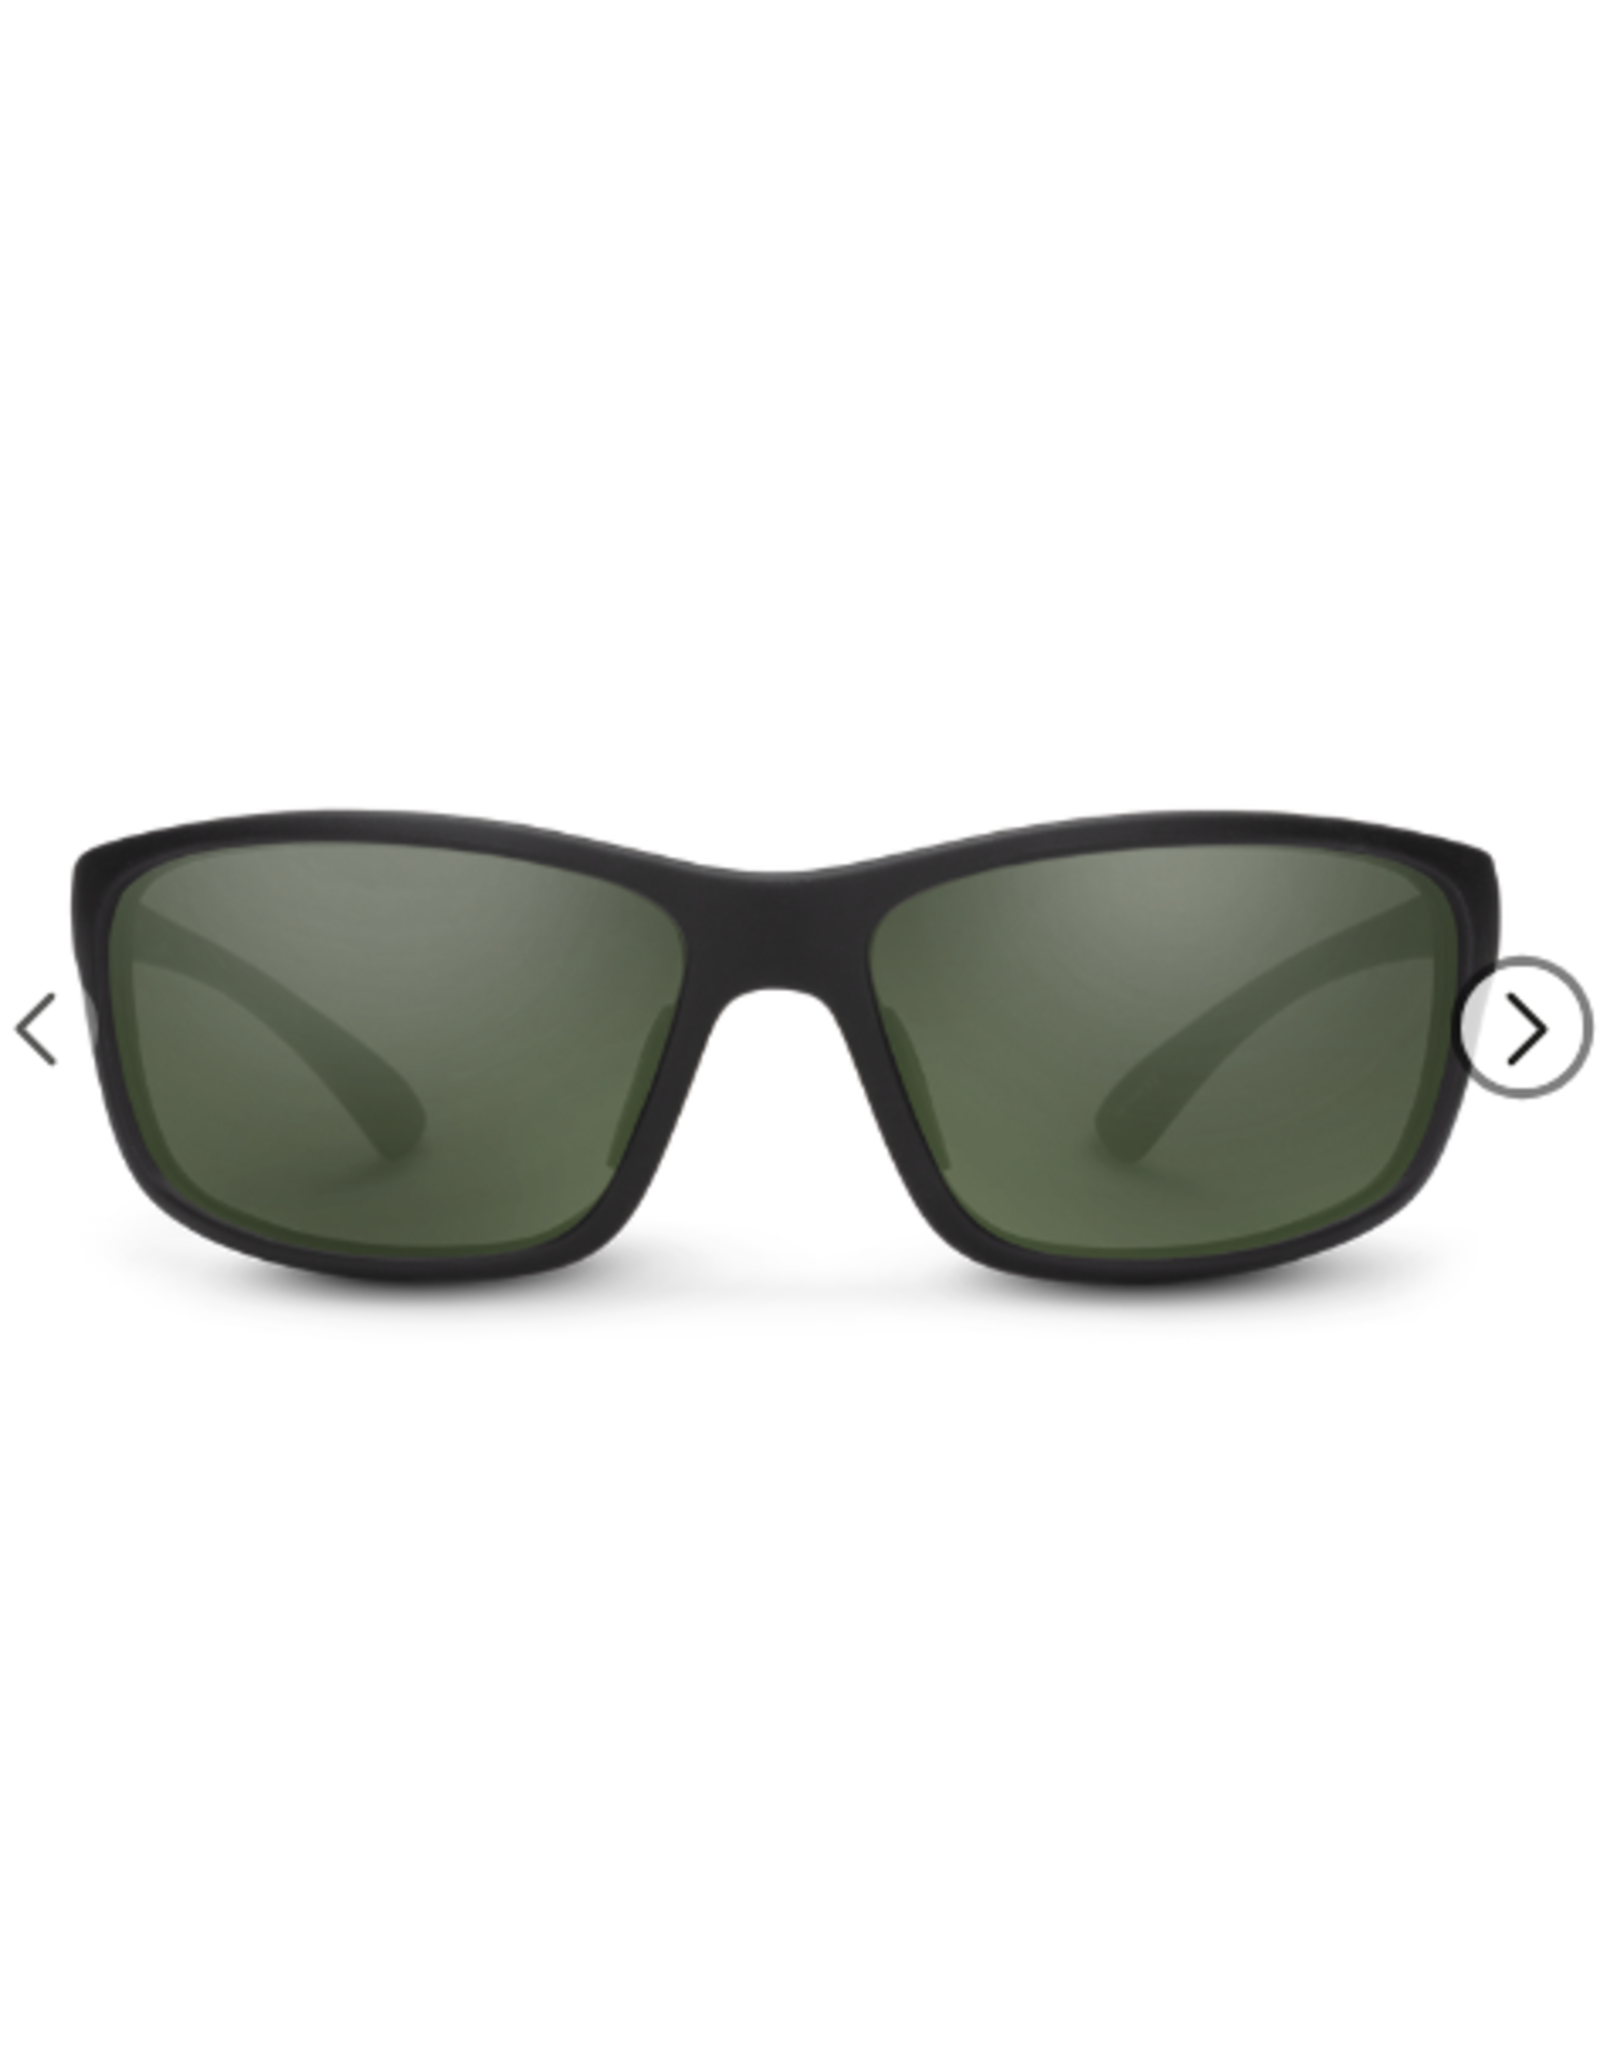 SunCloud Sentry $54.95 Select Color: Matte Black + Polarized Gray Green Lens